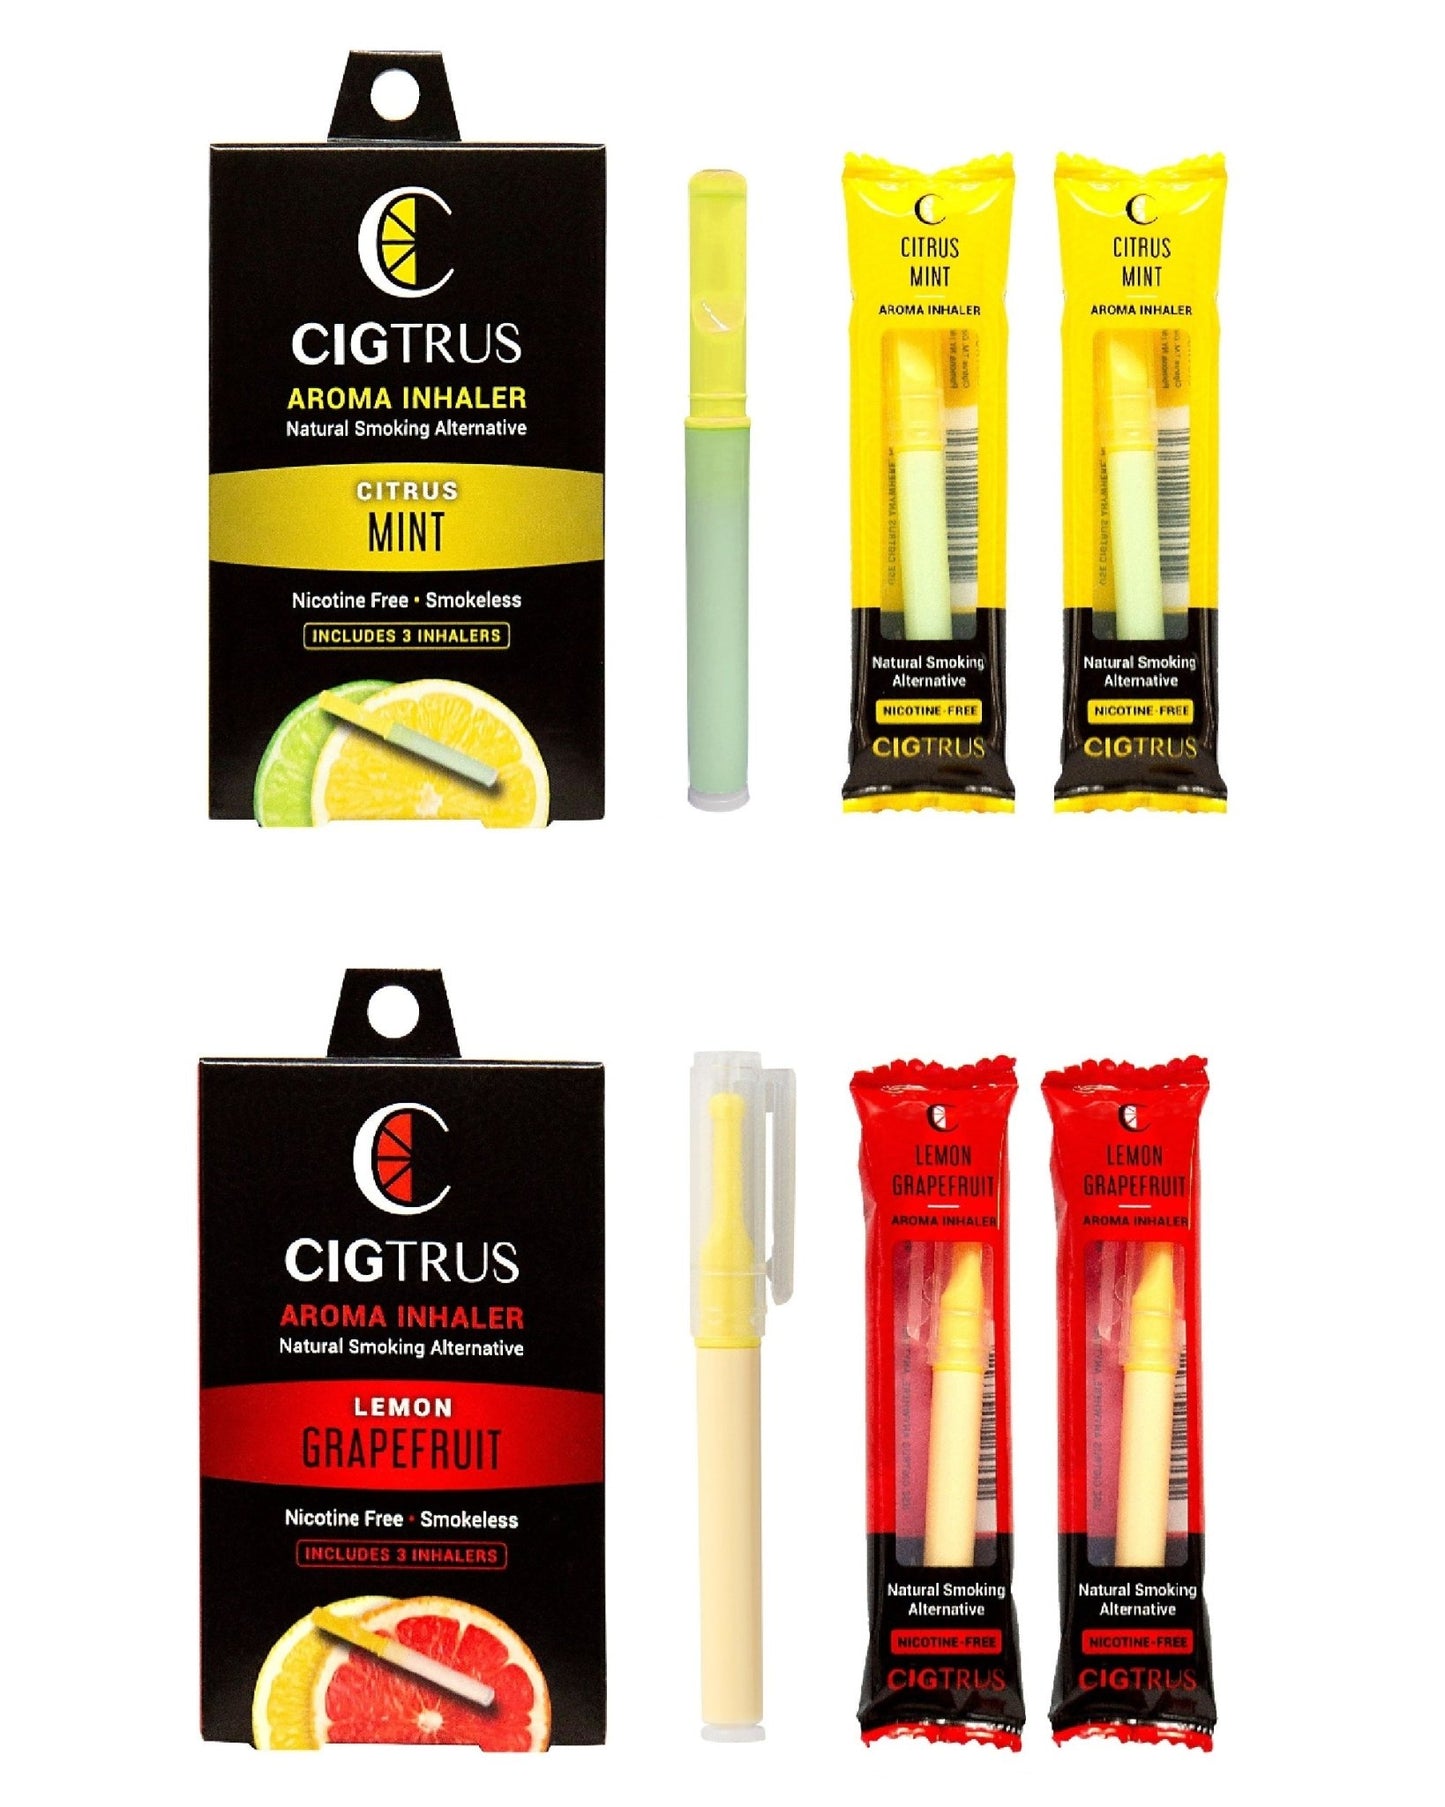 Cigtrus Stop Smoking Behavioral Support Quit Aid Help Nicotine-Free Safe & Natural Remedy - The Citrus Collection Grapefruit & Lemon Lime 3 Pack Each Flavor - cigtrus.comcigtrus.com